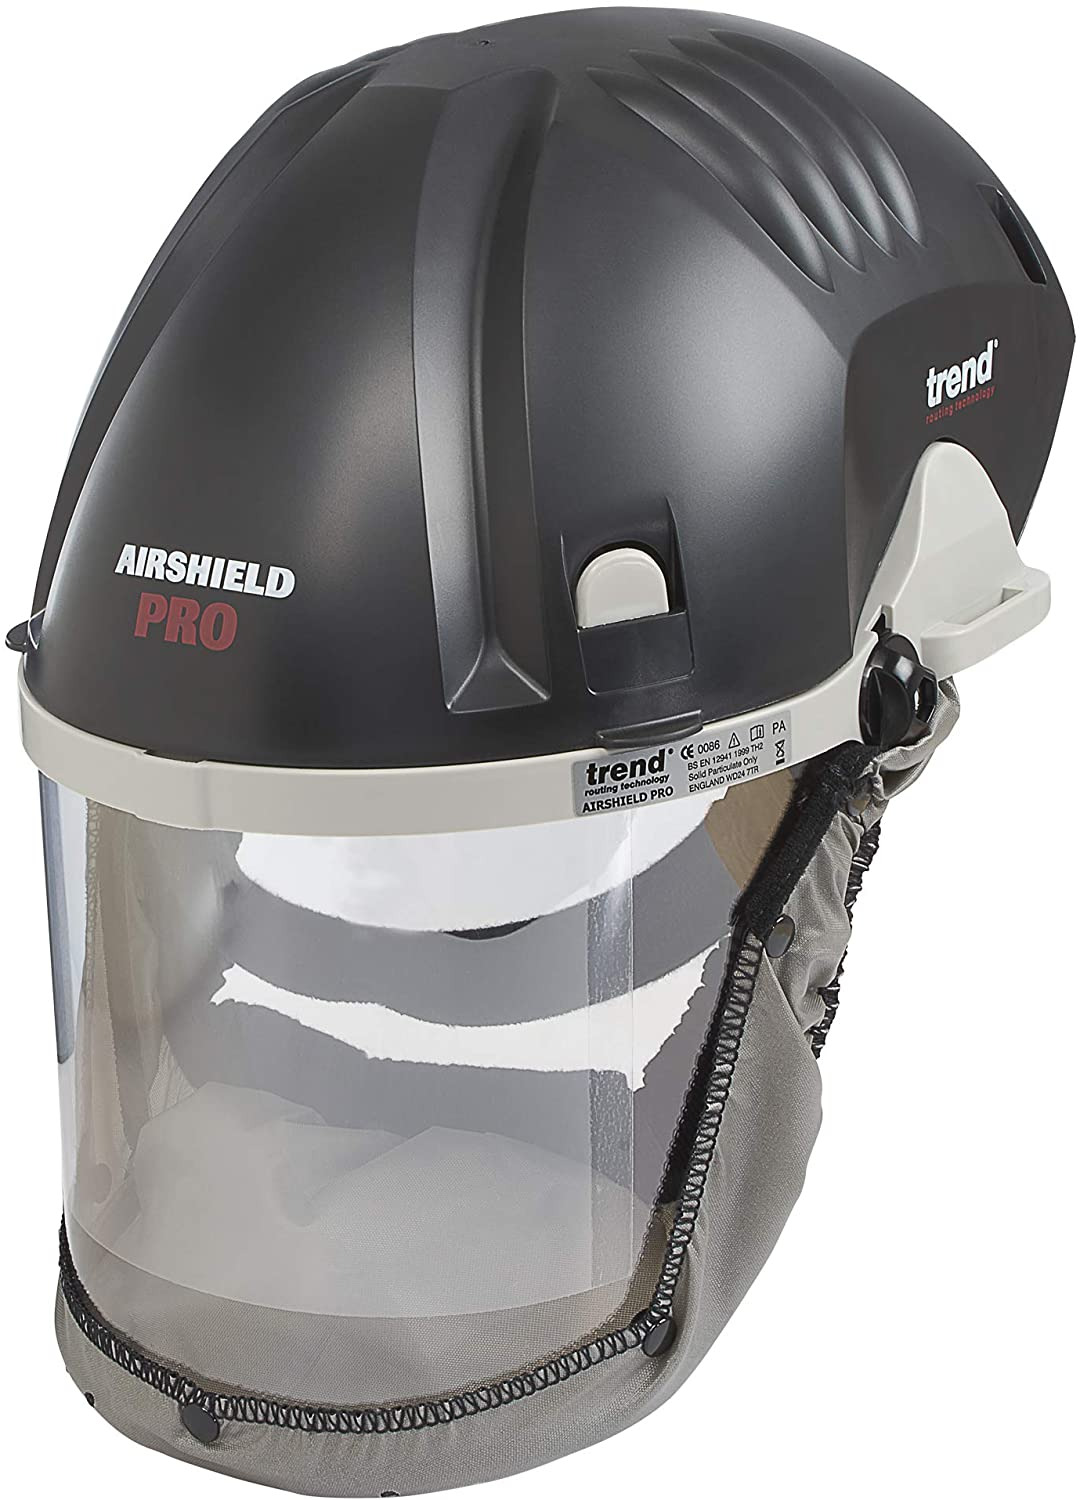 Airshield Pro Full Faceshield, Dust Protector, Battery Powered Air Circulating M